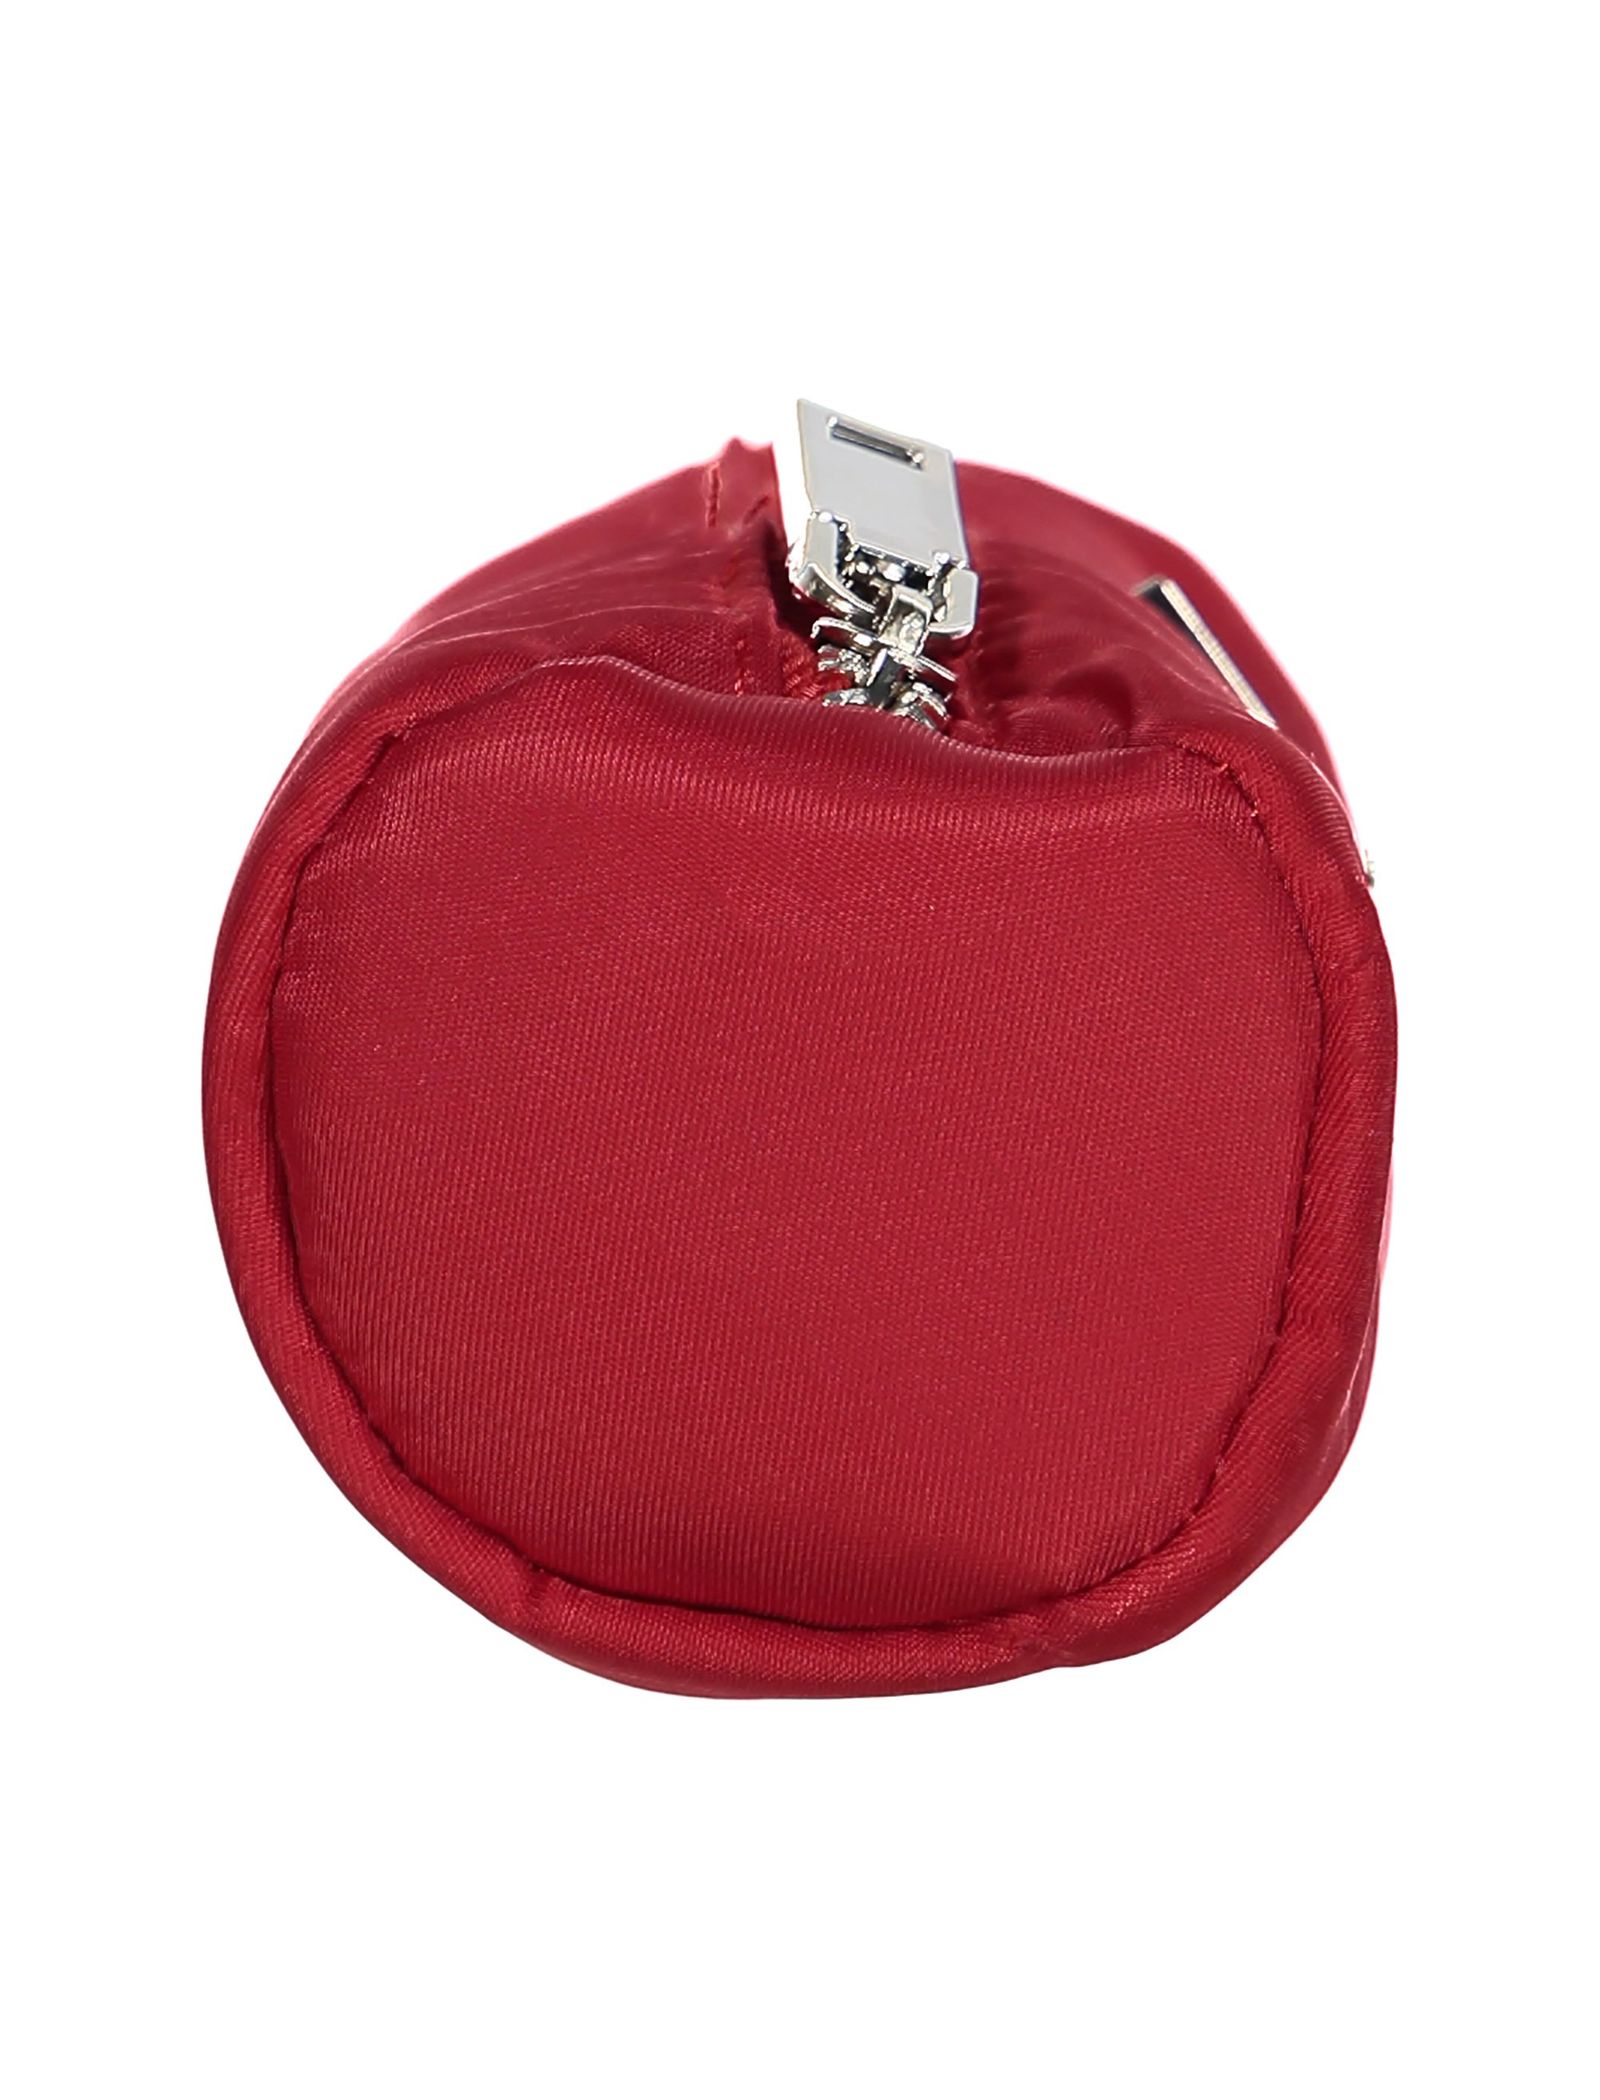 کیف لوازم آرایش زنانه - مانگو - قرمز - 4